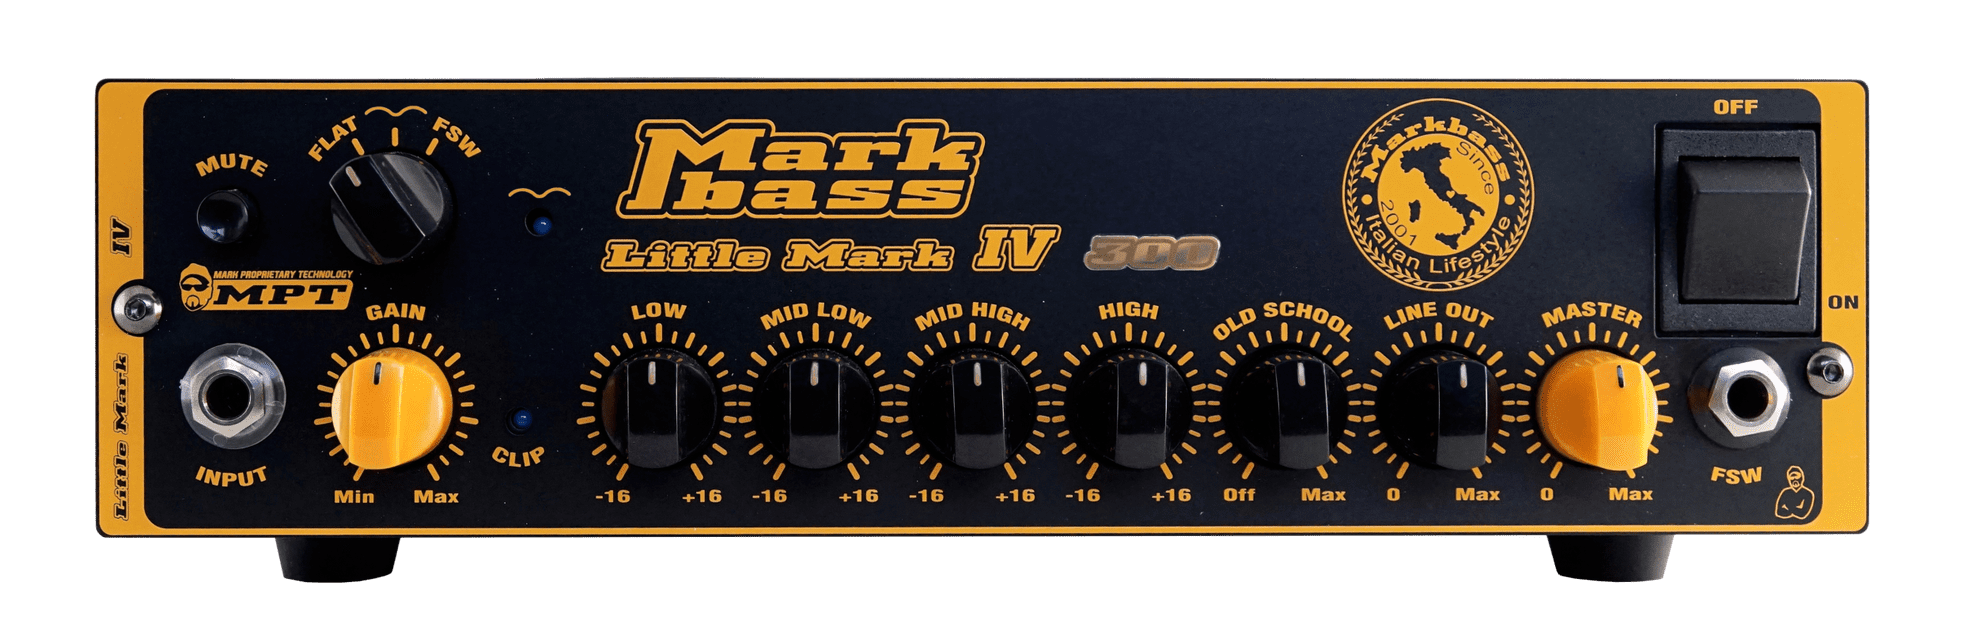 Markbass LITTLEMARK-IV-300U 300W Bass Amp Head With 4-band EQ Old School Filter